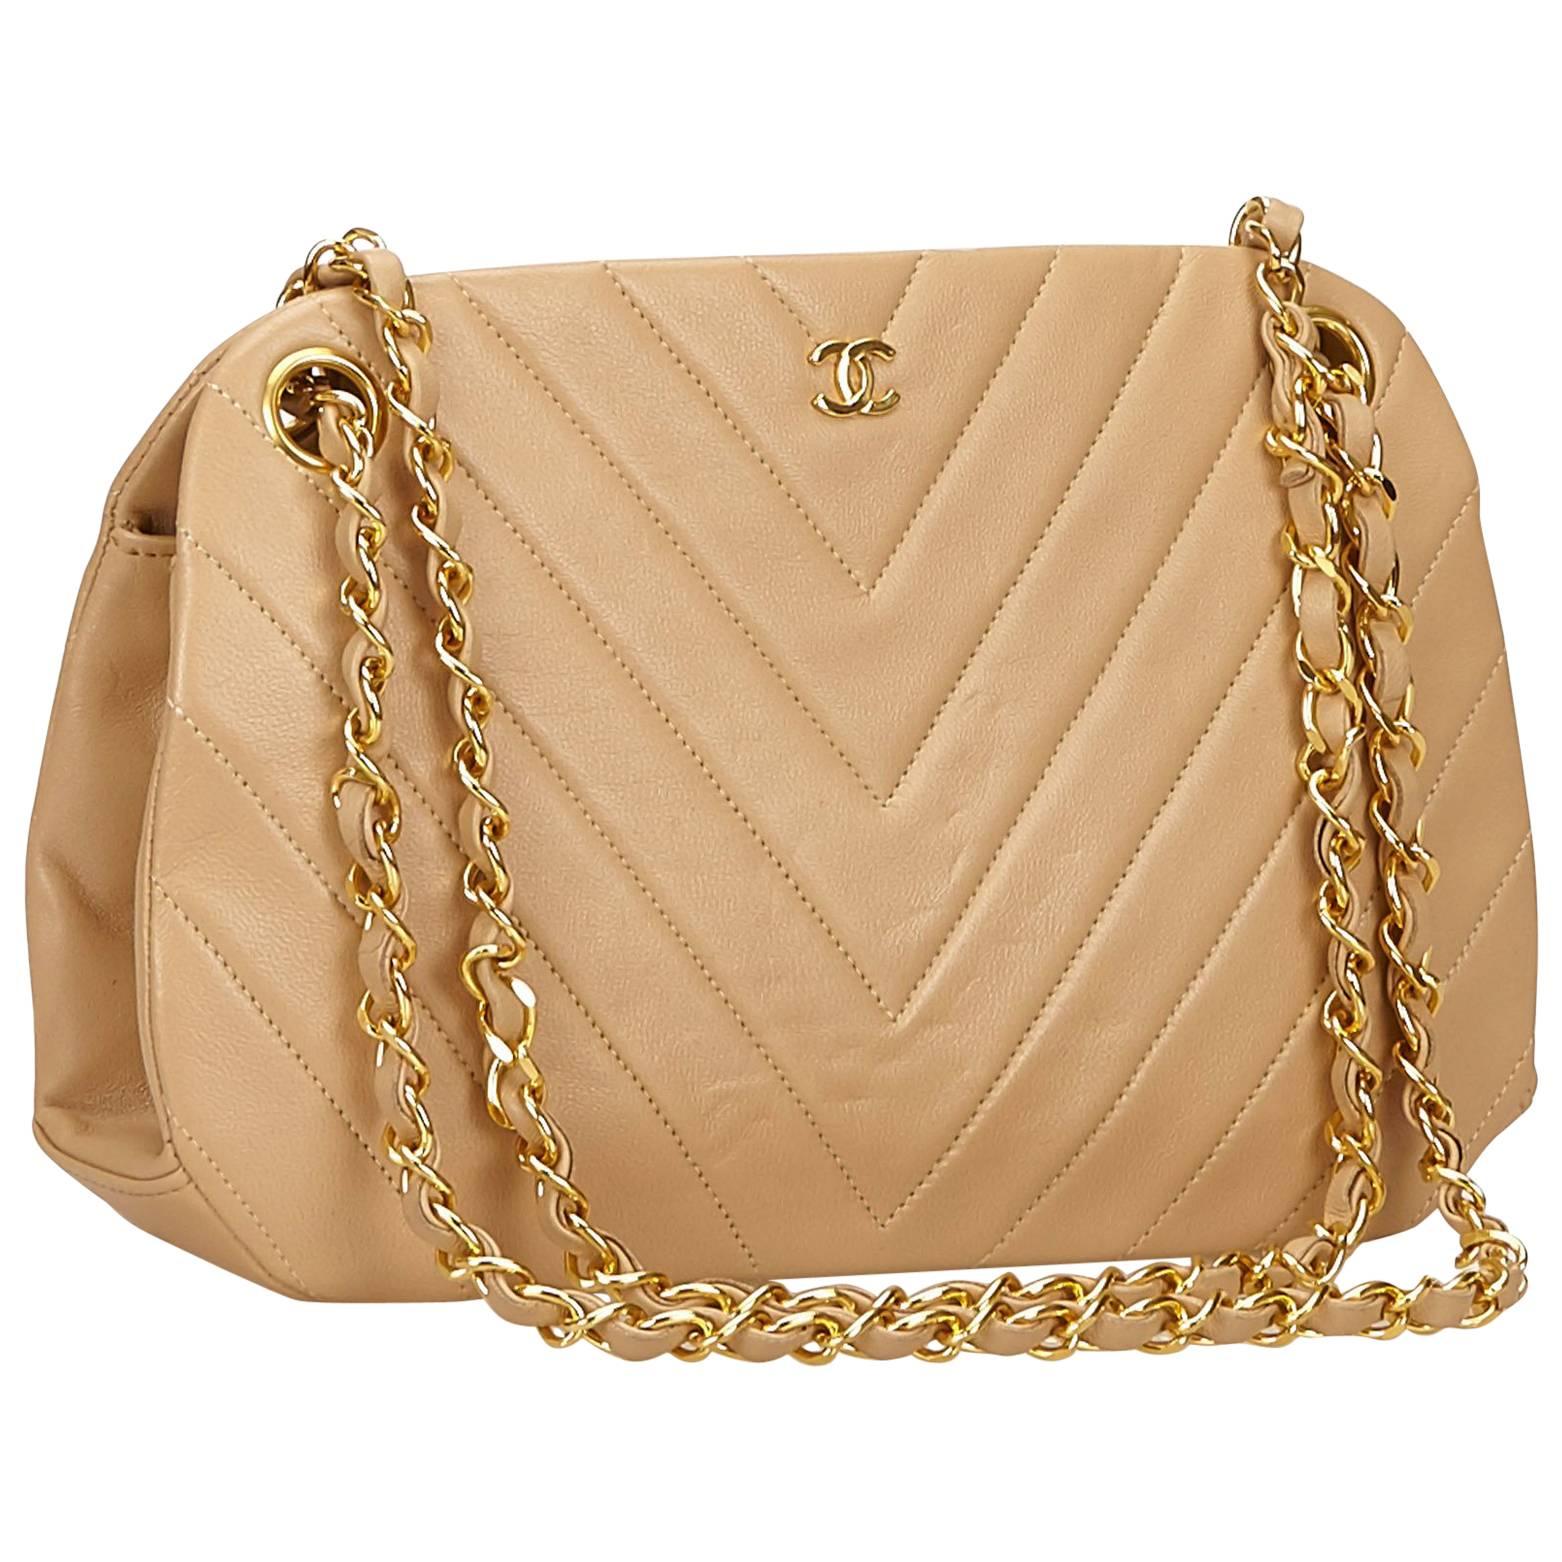 Chanel Beige Lambskin Leather Chevron Gold Chain Shoulder Bag